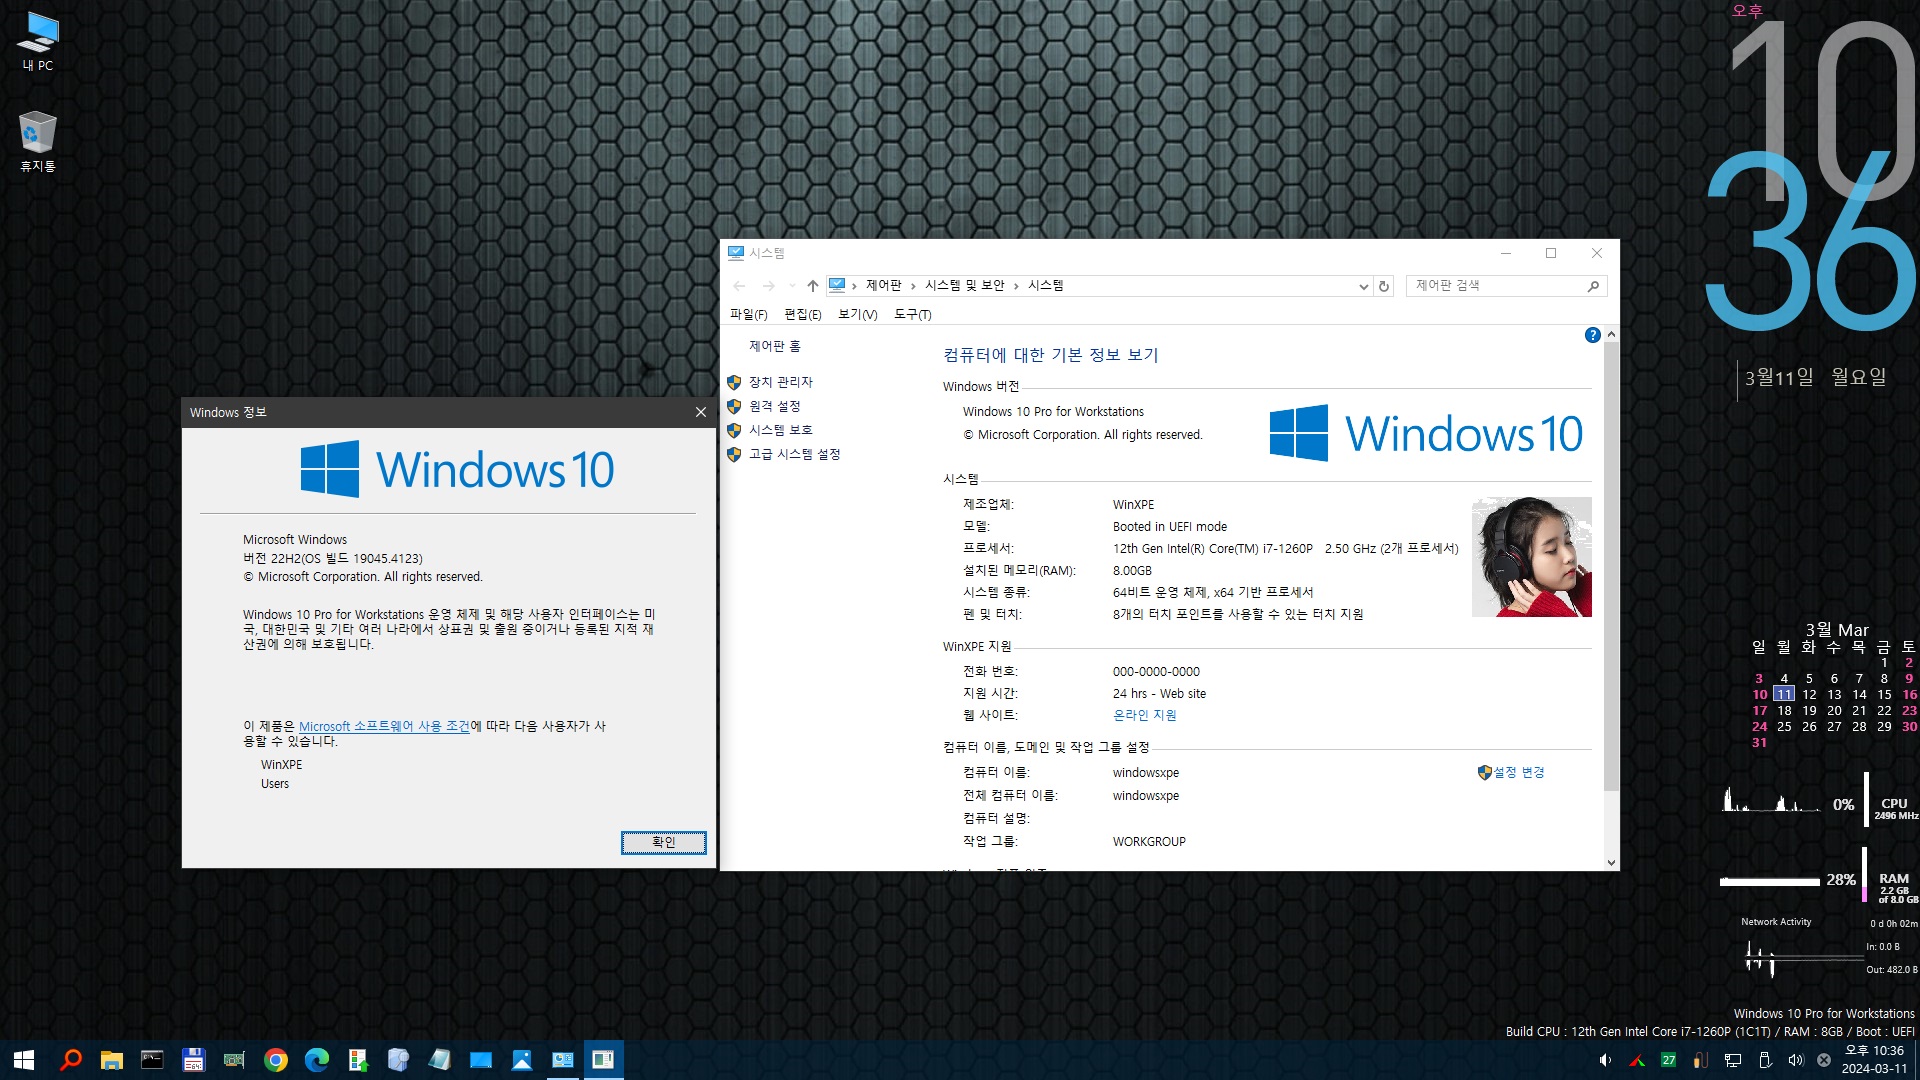 Windows10_XPE_22H2(19045.4123).jpg